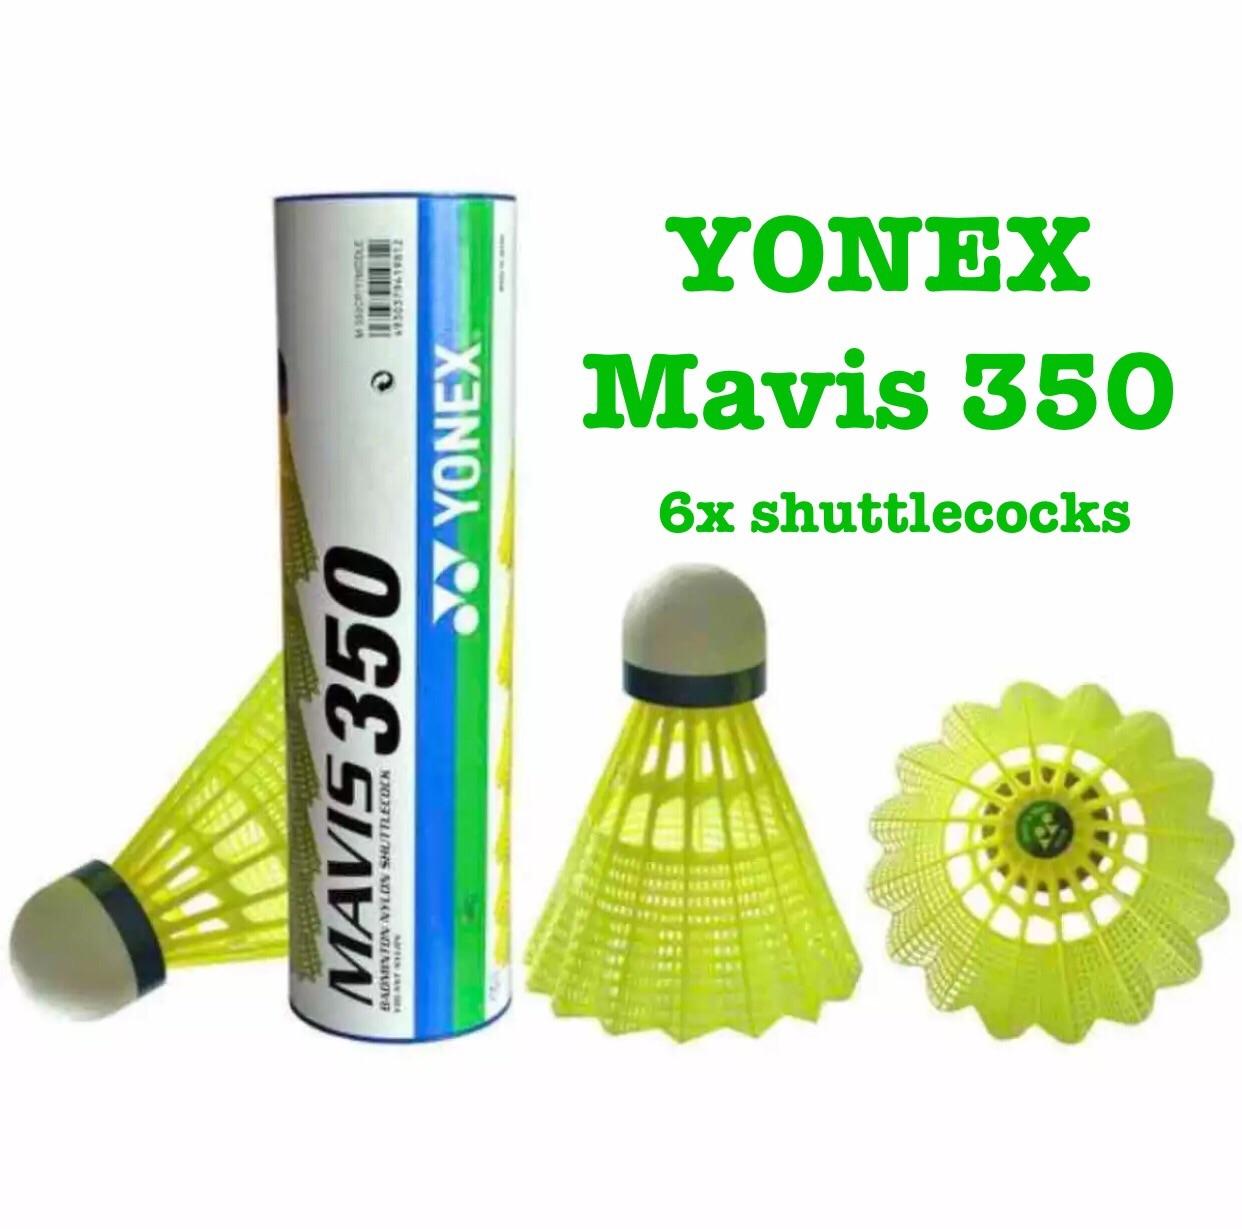 Yonex ลูกขนไก่พลาสติก Yonex Mavis 350 (6ลูก) Original Badminton Shuttlecocks (Yellow / Green Cap & Blue Cap)